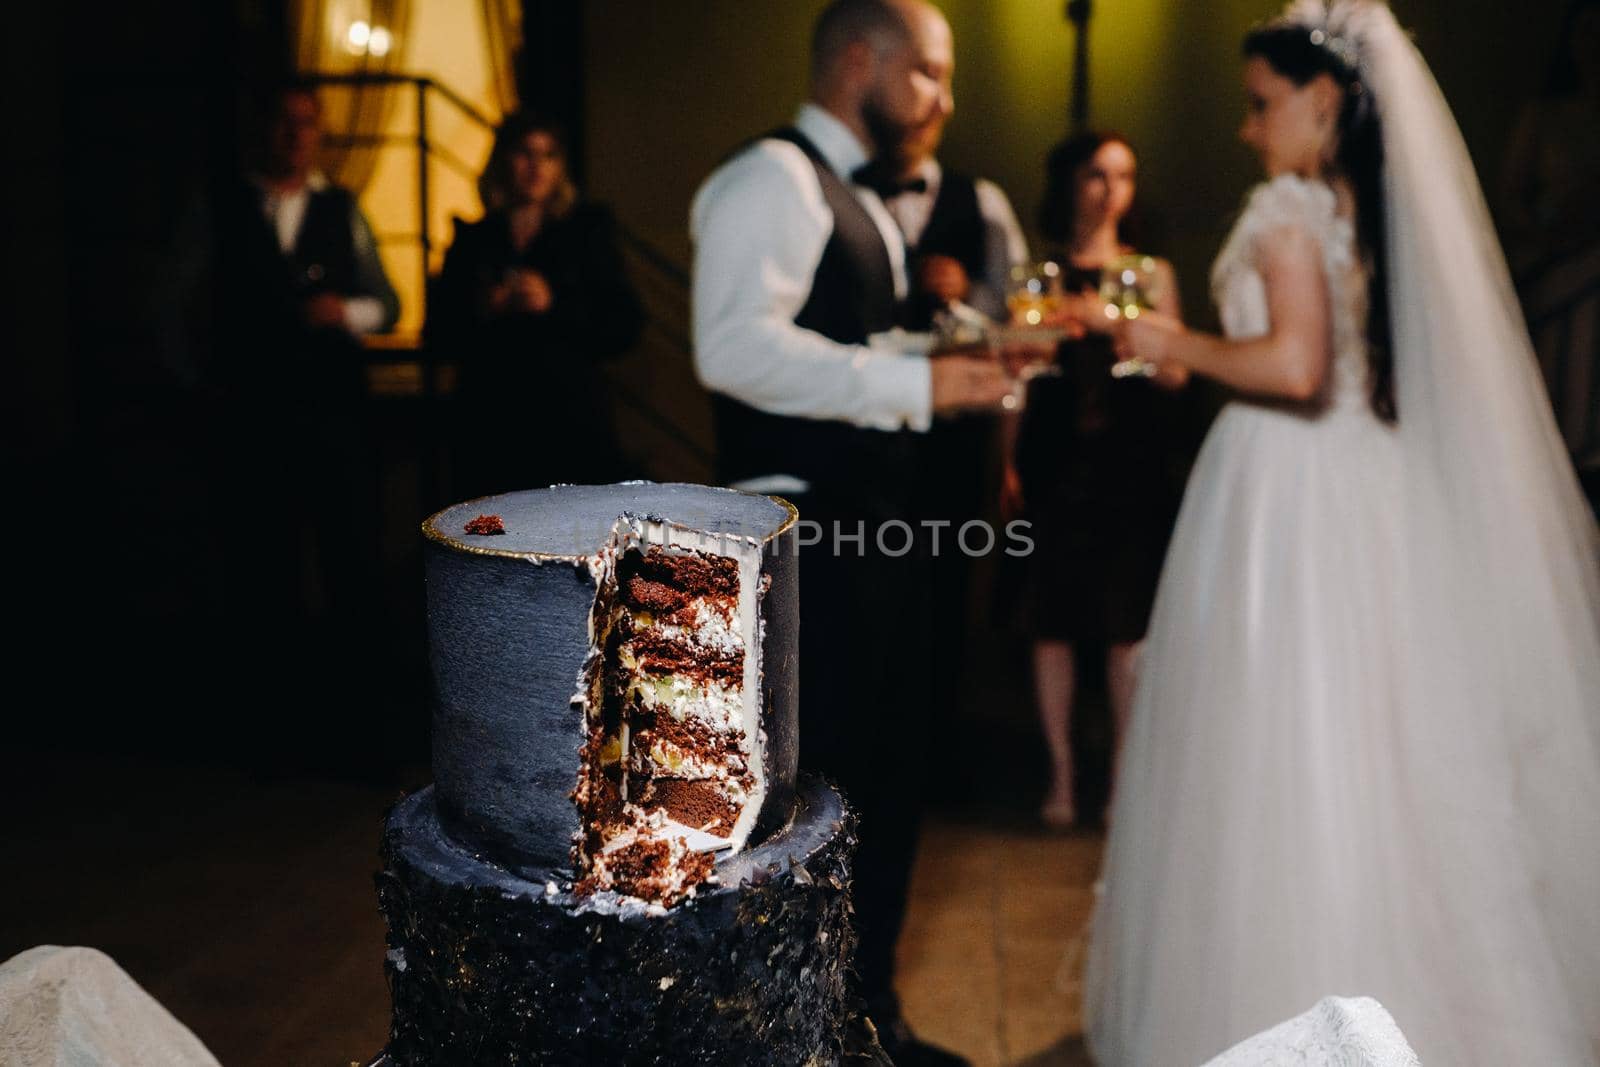 A close-up cut of a wedding cake at a wedding.